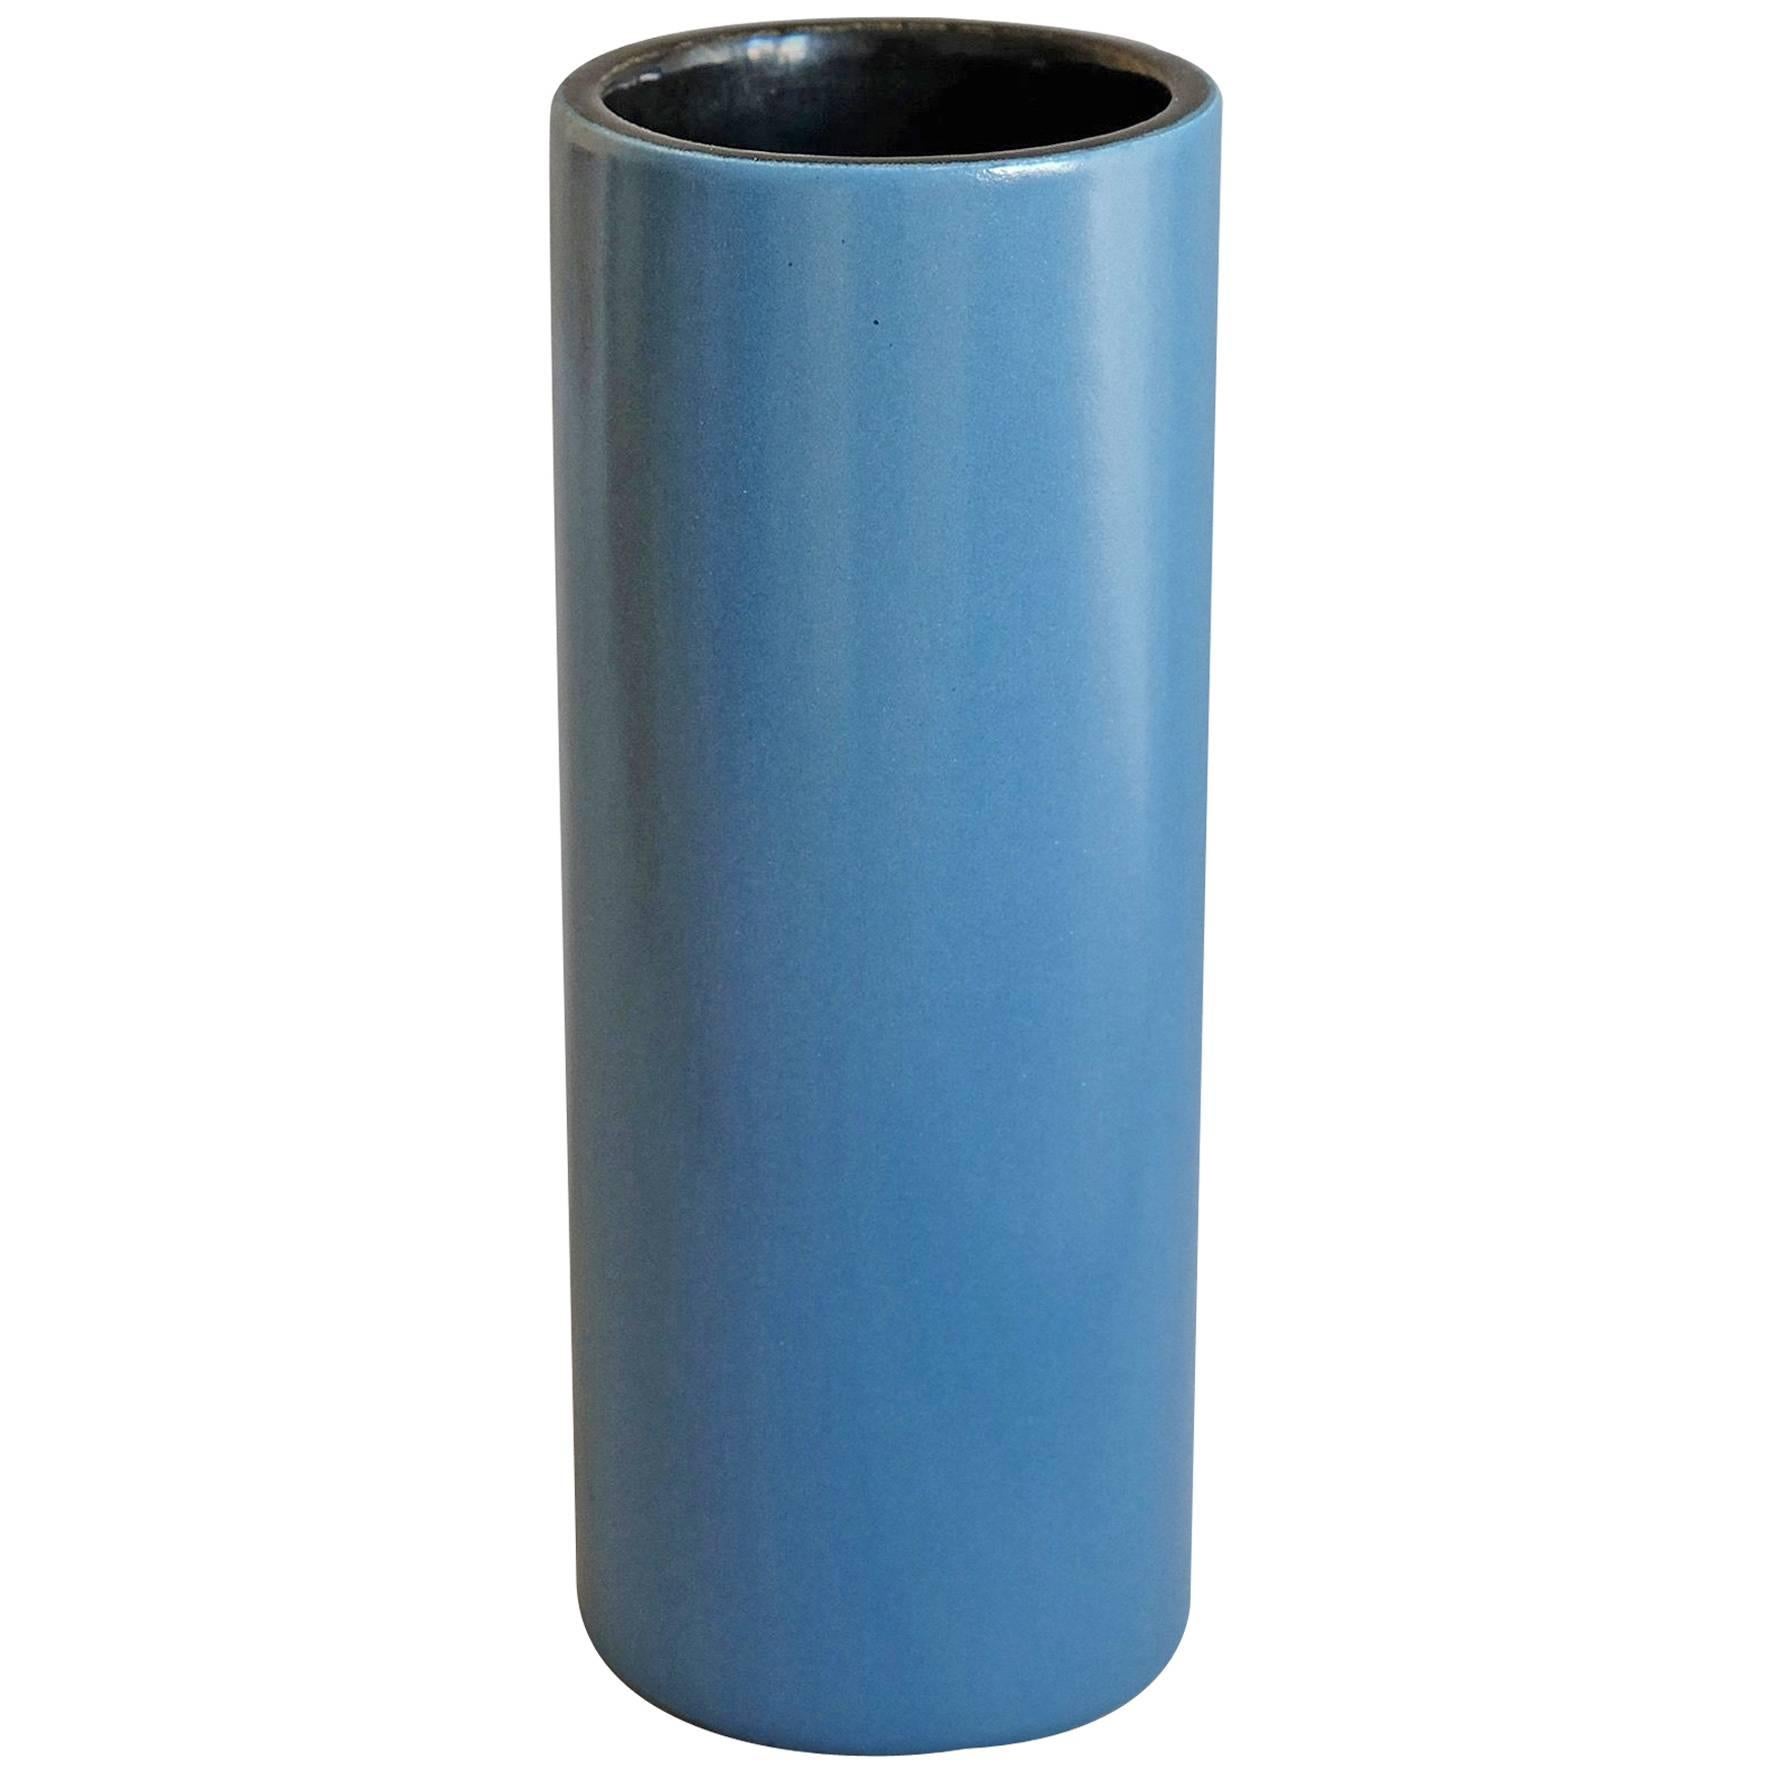 Georges Jouve, a Blue Cylinder Vase, circa 1960